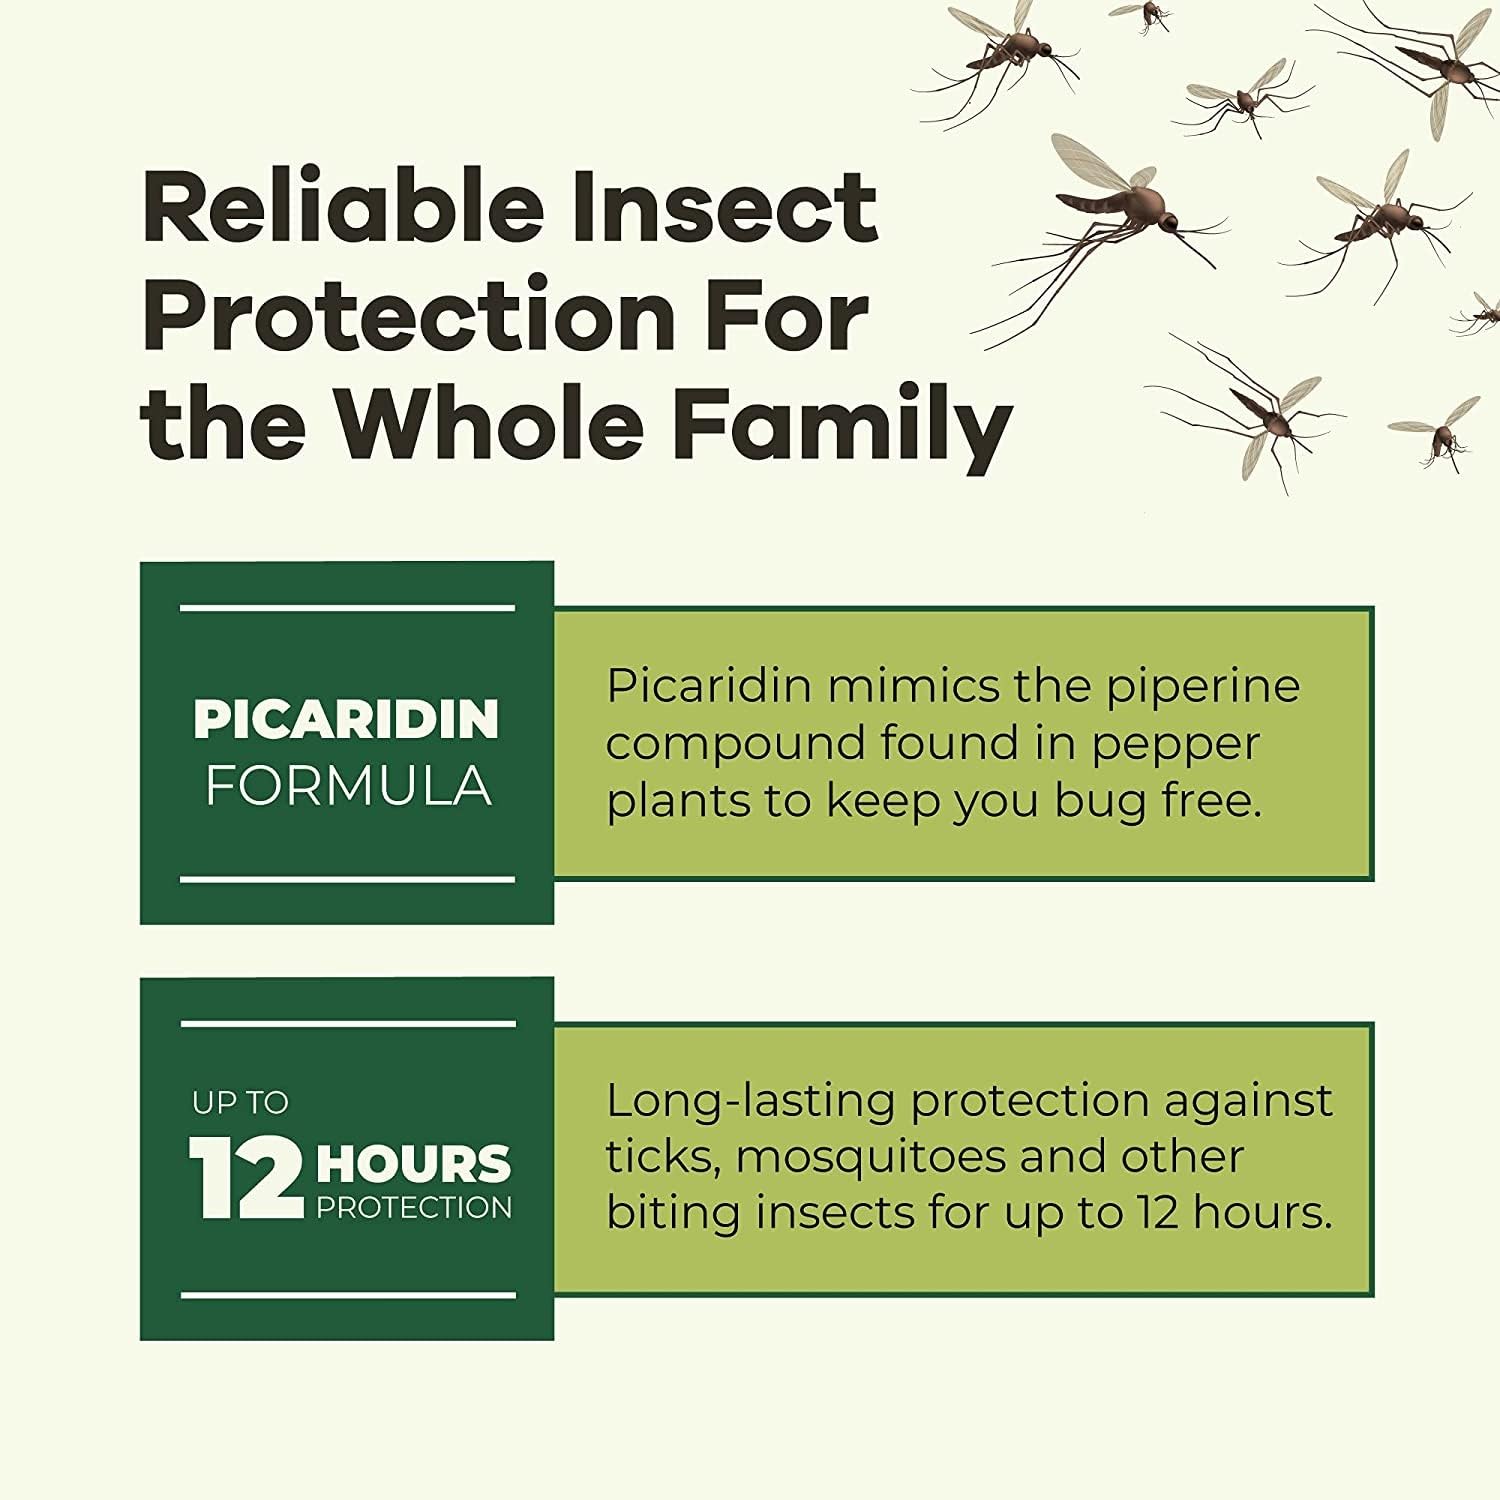 Natrapel Tick & Insect Repellent Eco-Spray - 20% Picaridin Formula 6 oz (2 Pack)